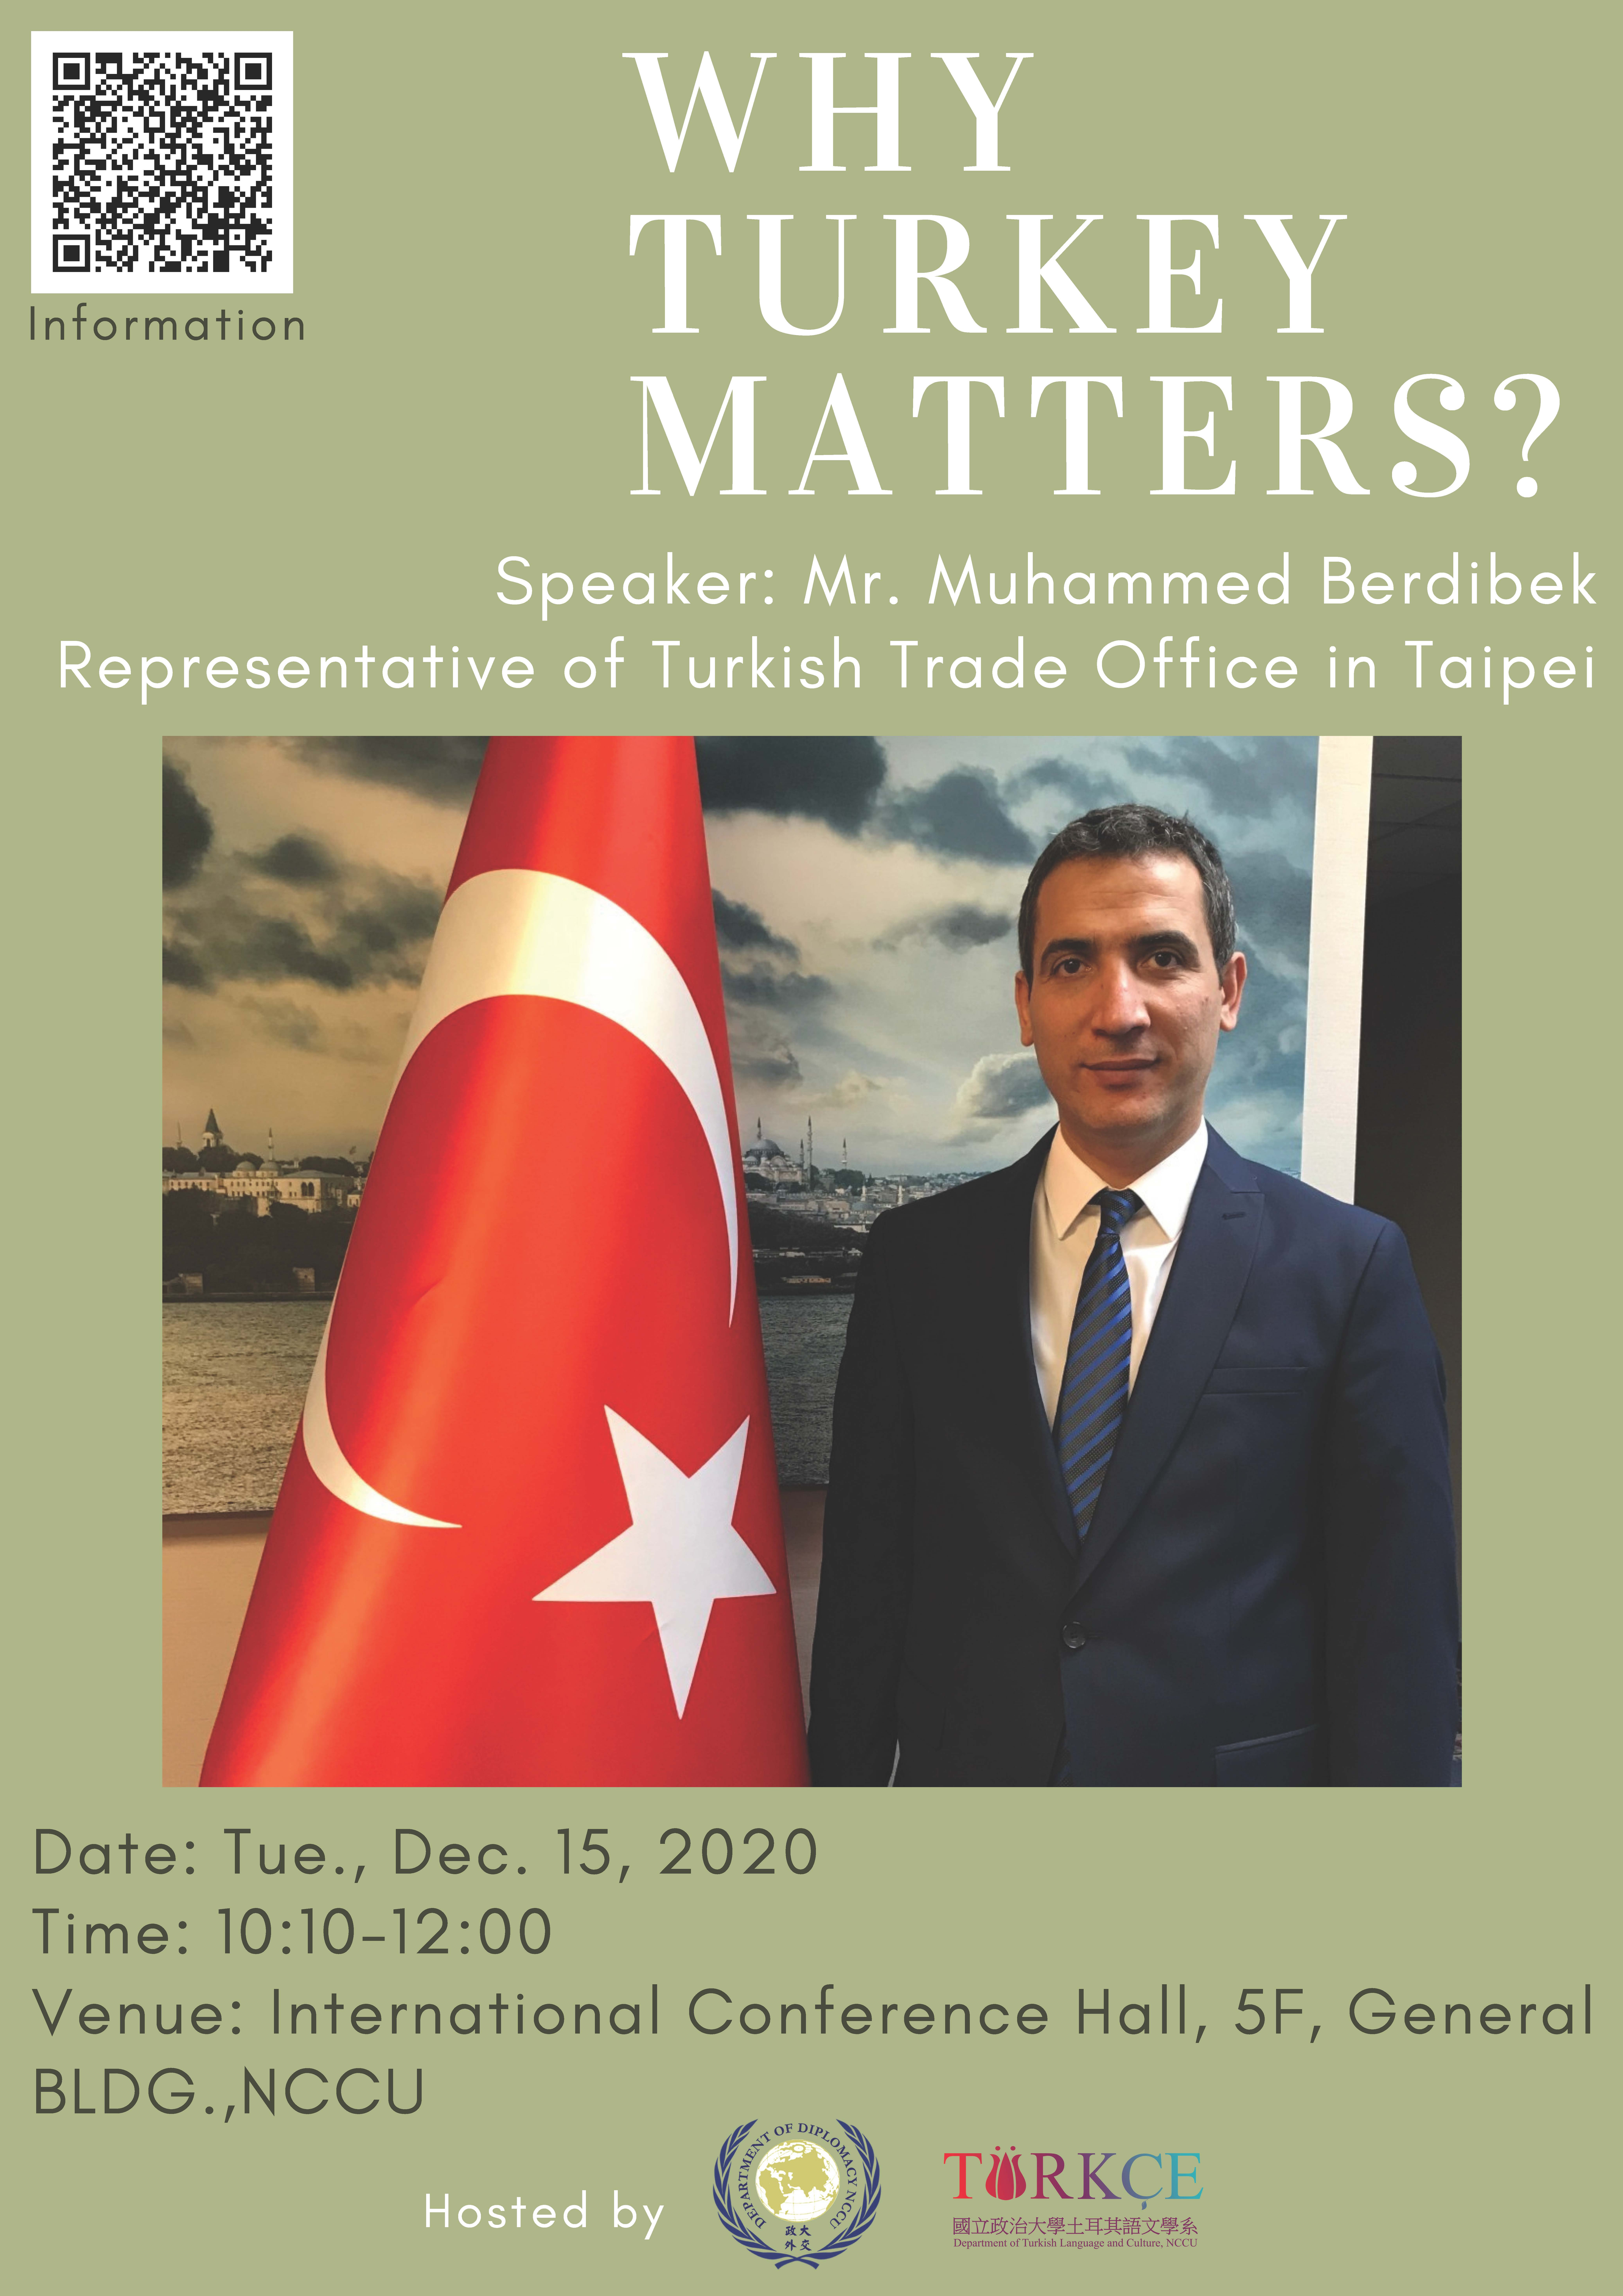 Presentation by Mr. Muhammed Berdibek, Representative of Turkish Trade Office in Taipei